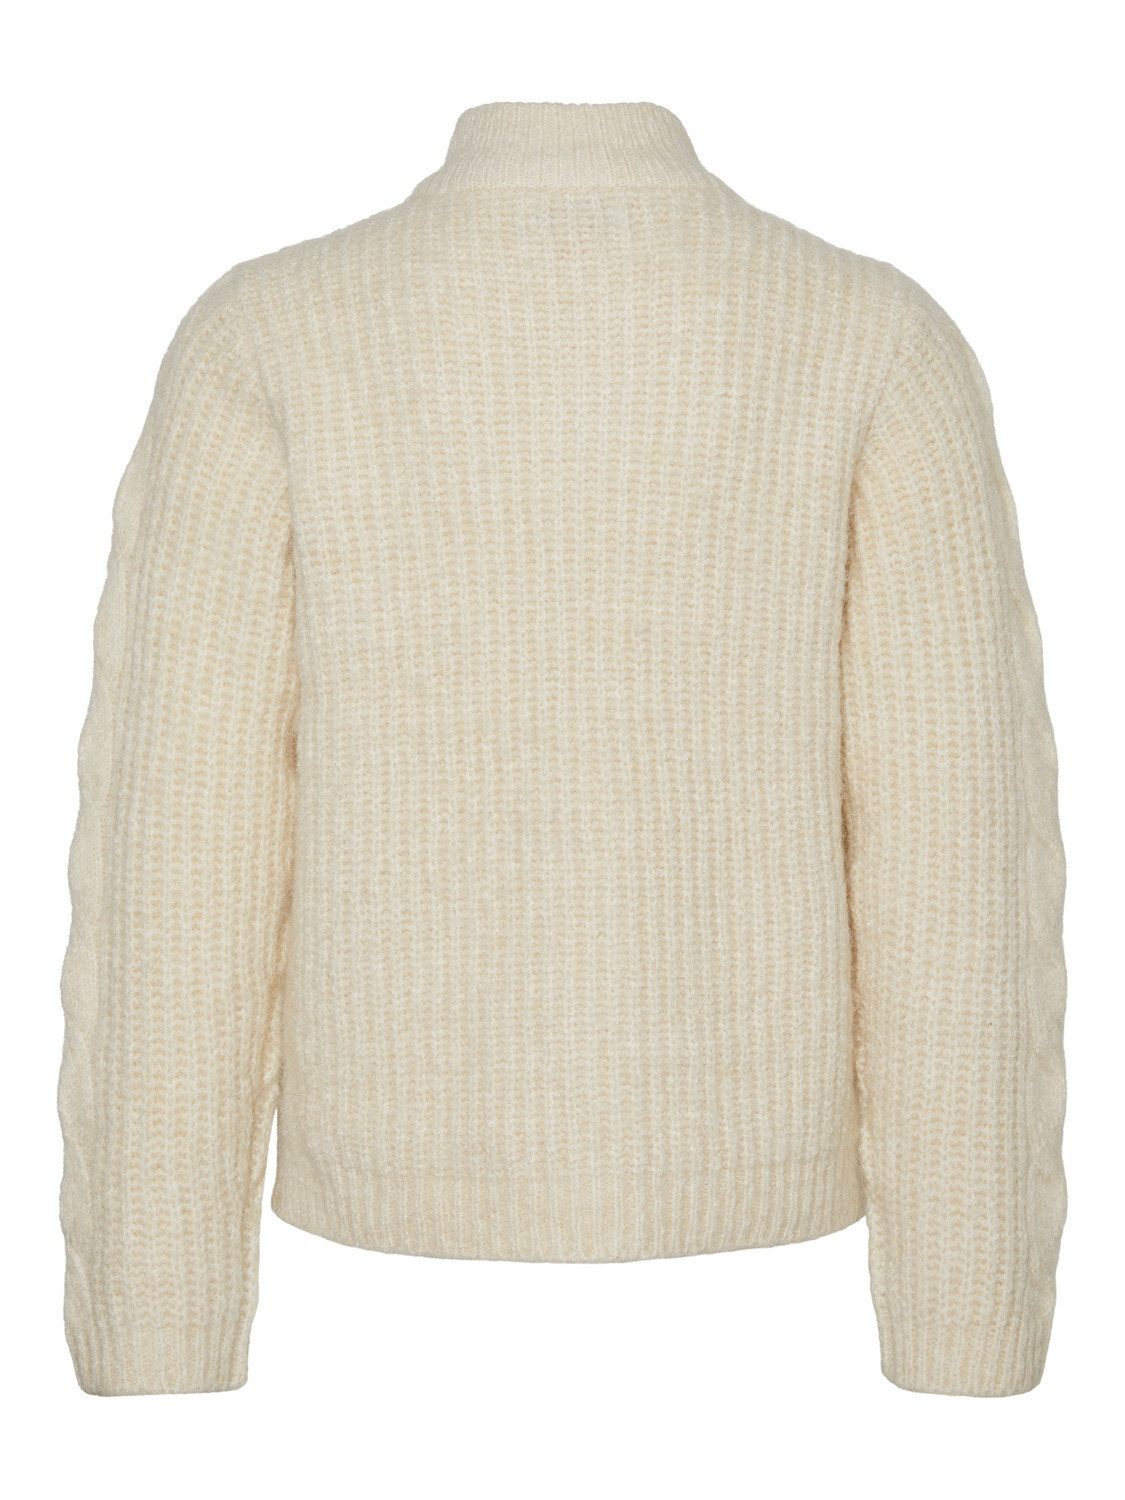 Vero Moda VMALBA Knit Cardigan -Birch - 10272980